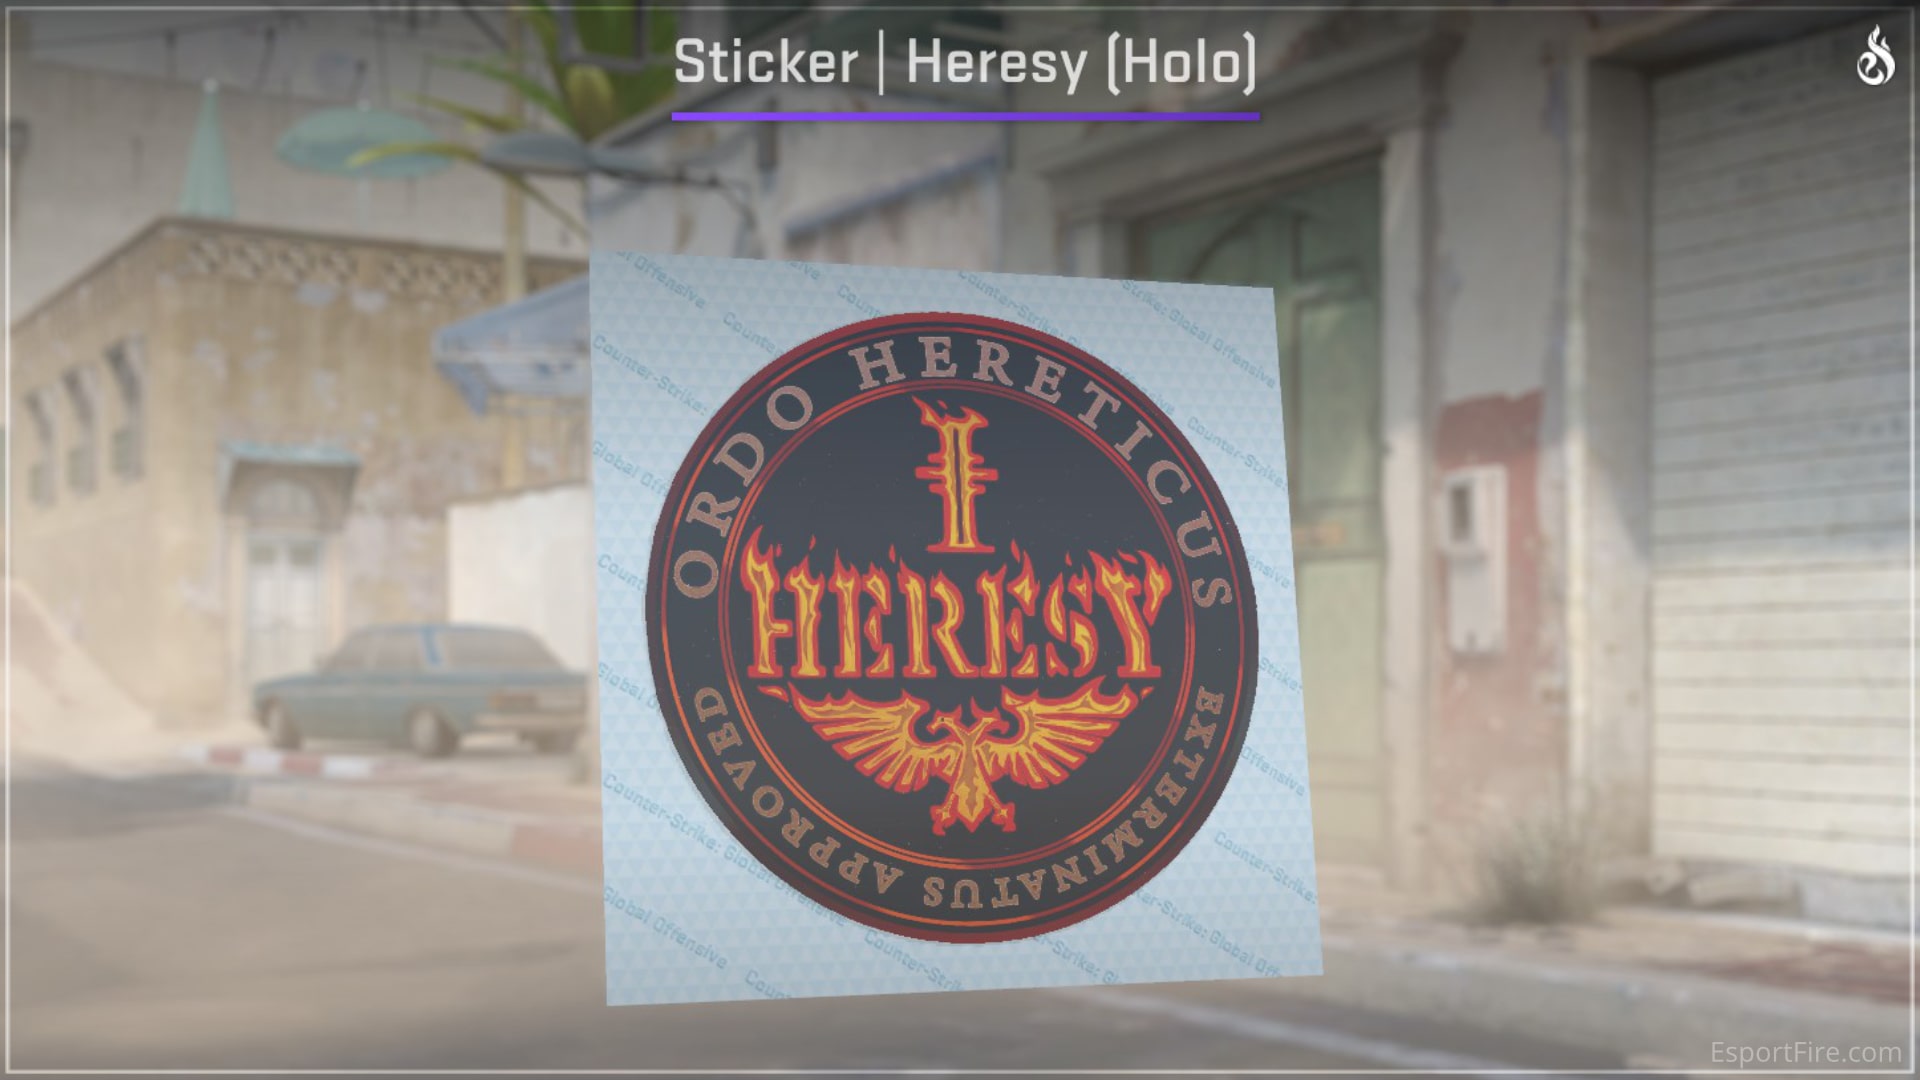 Heresy - Best Orange Stickers for Crafts